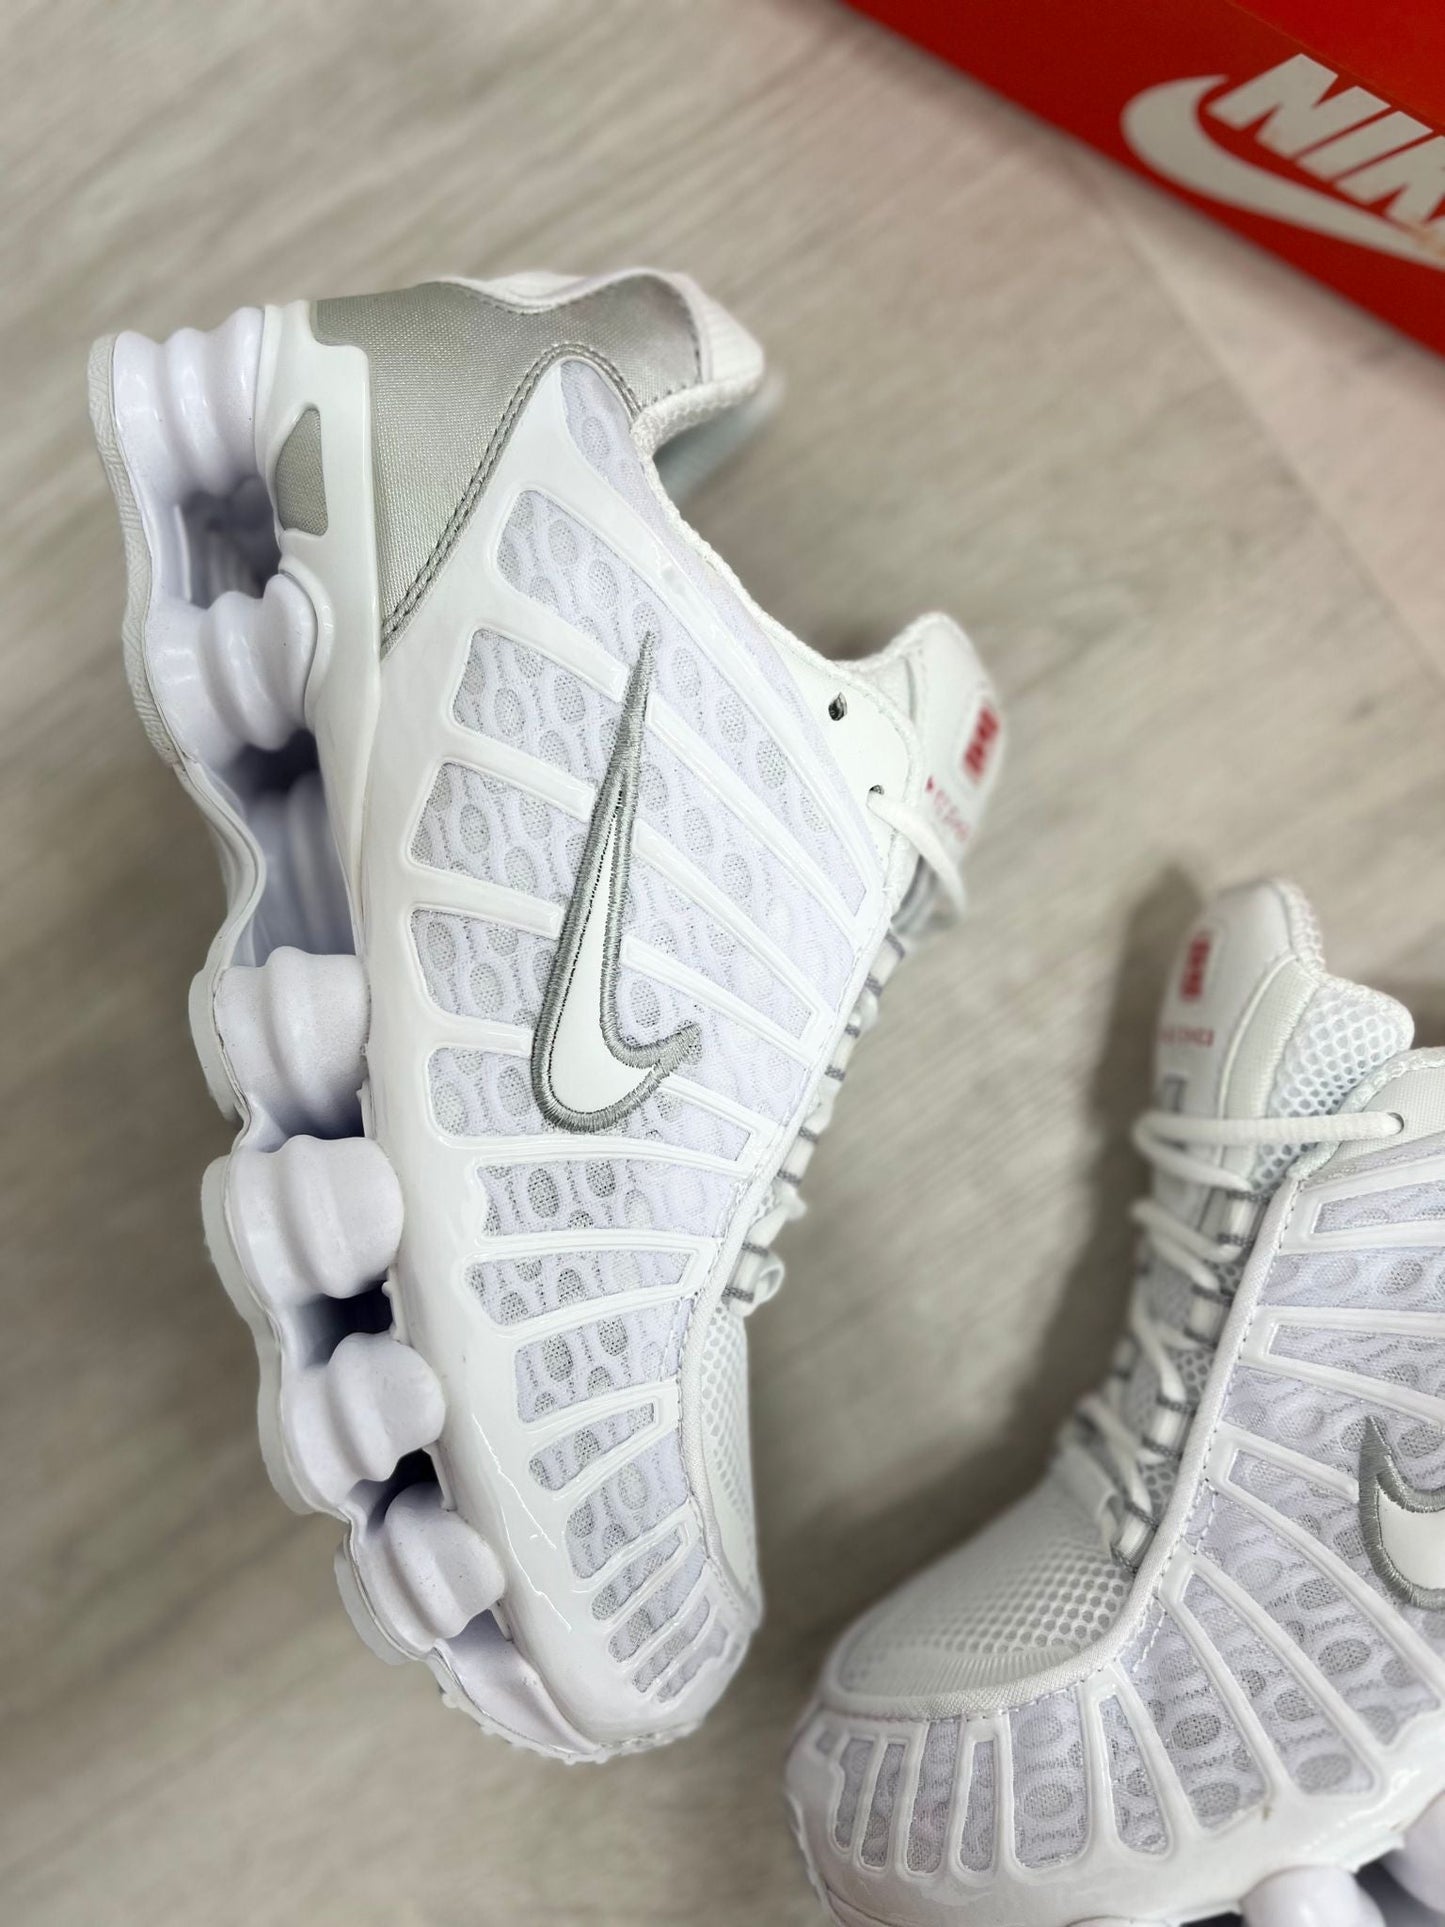 Nike Shox blanca “Máxima calidad”